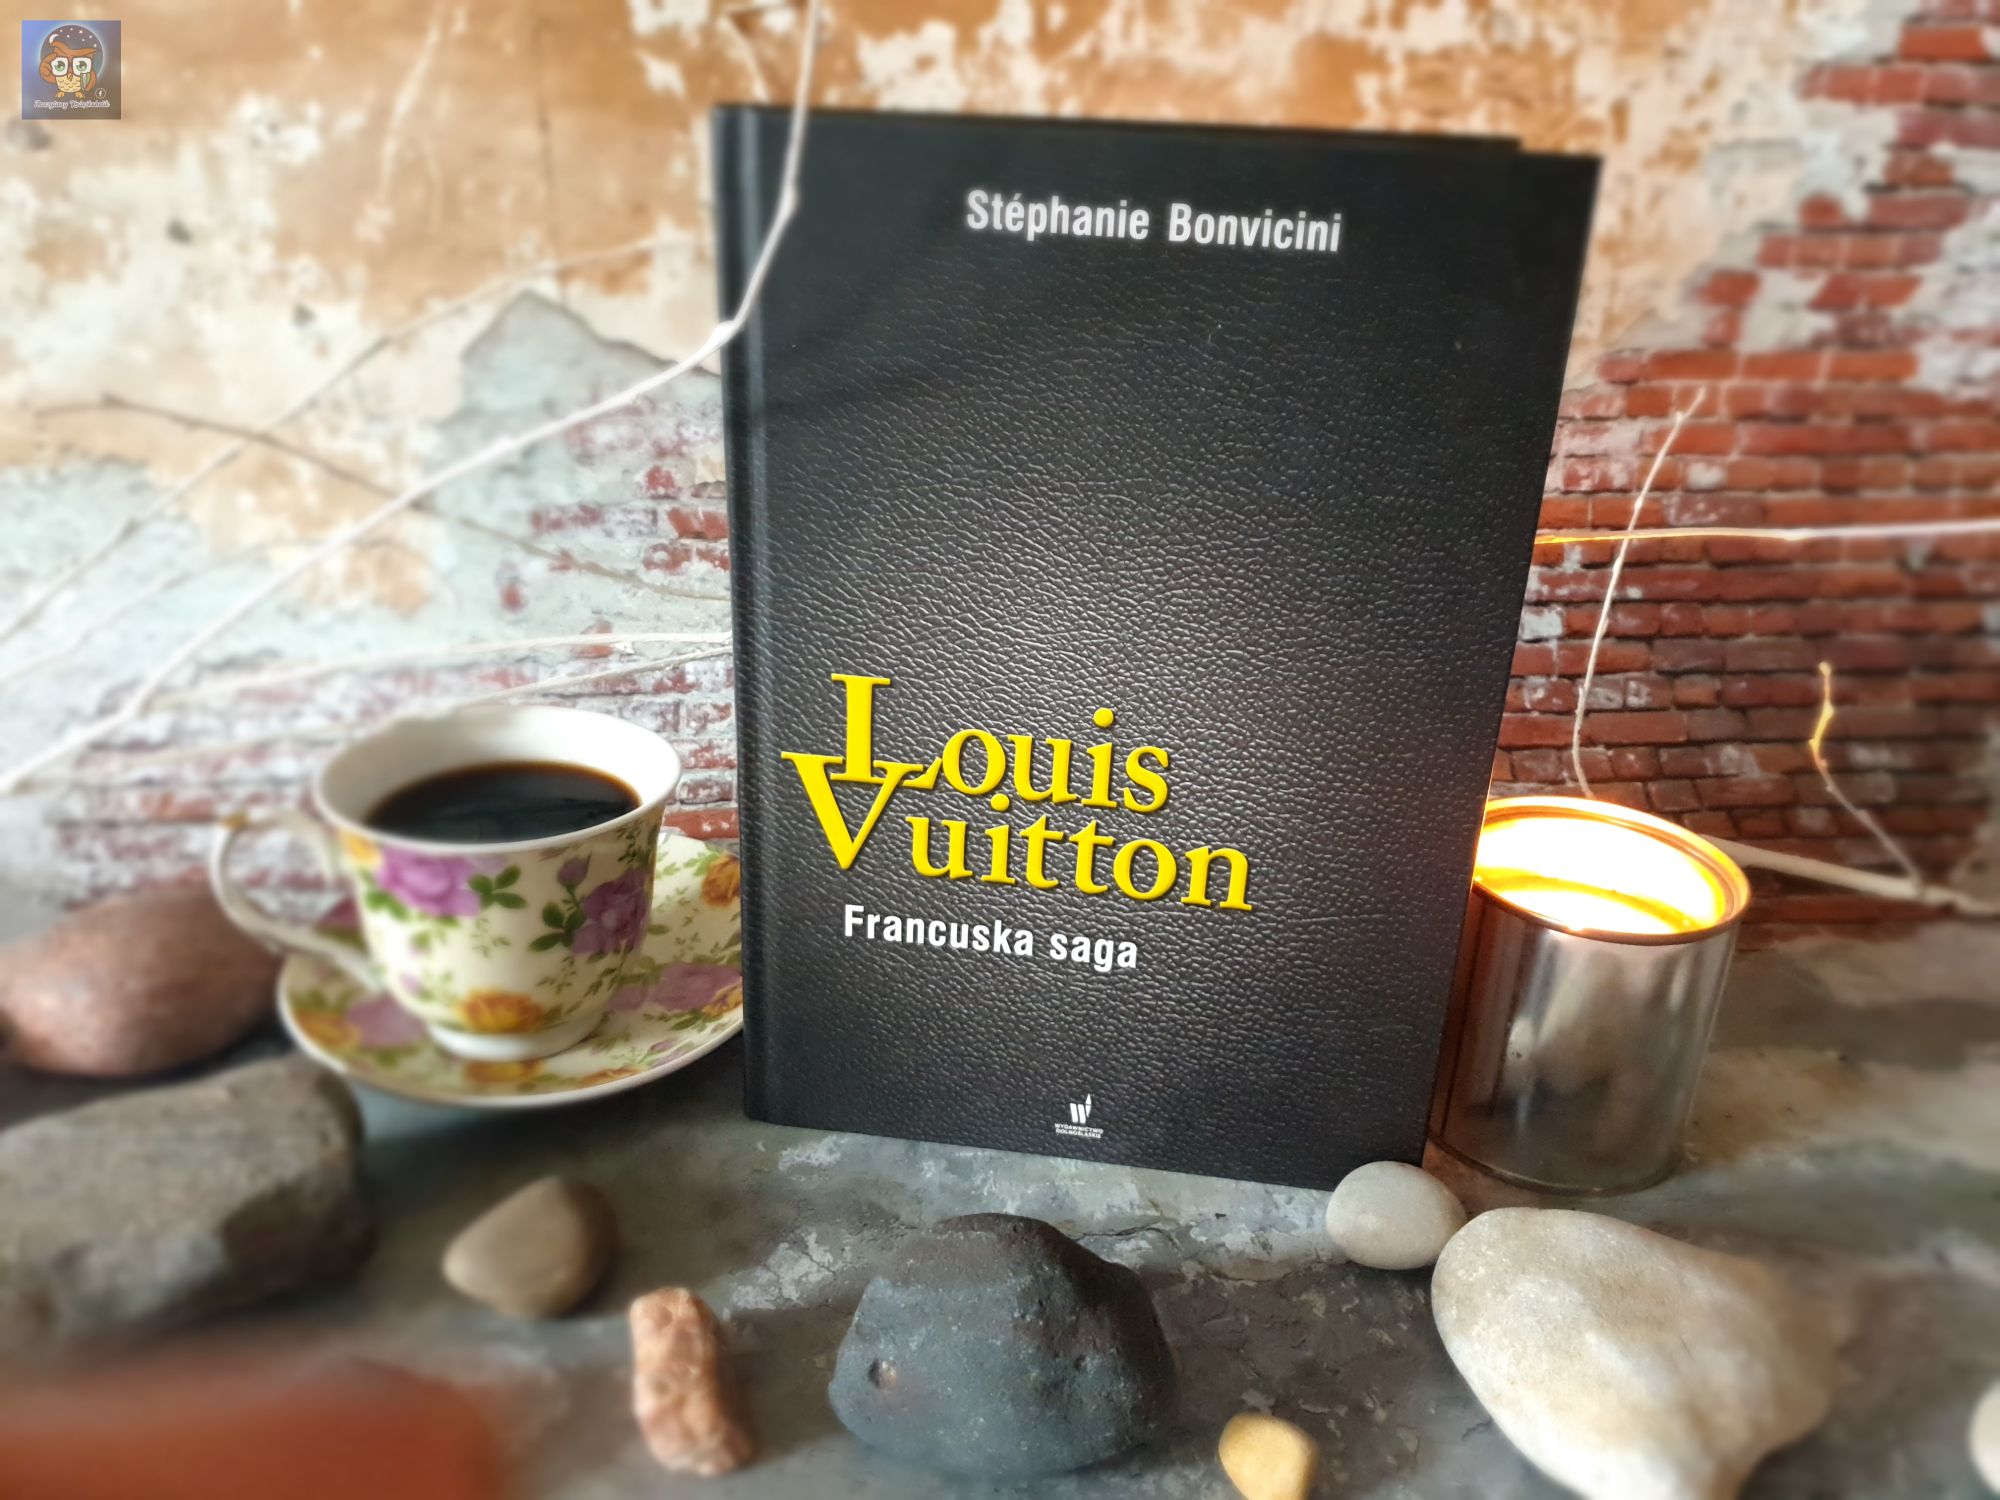 Louis Vuitton. Francuska saga